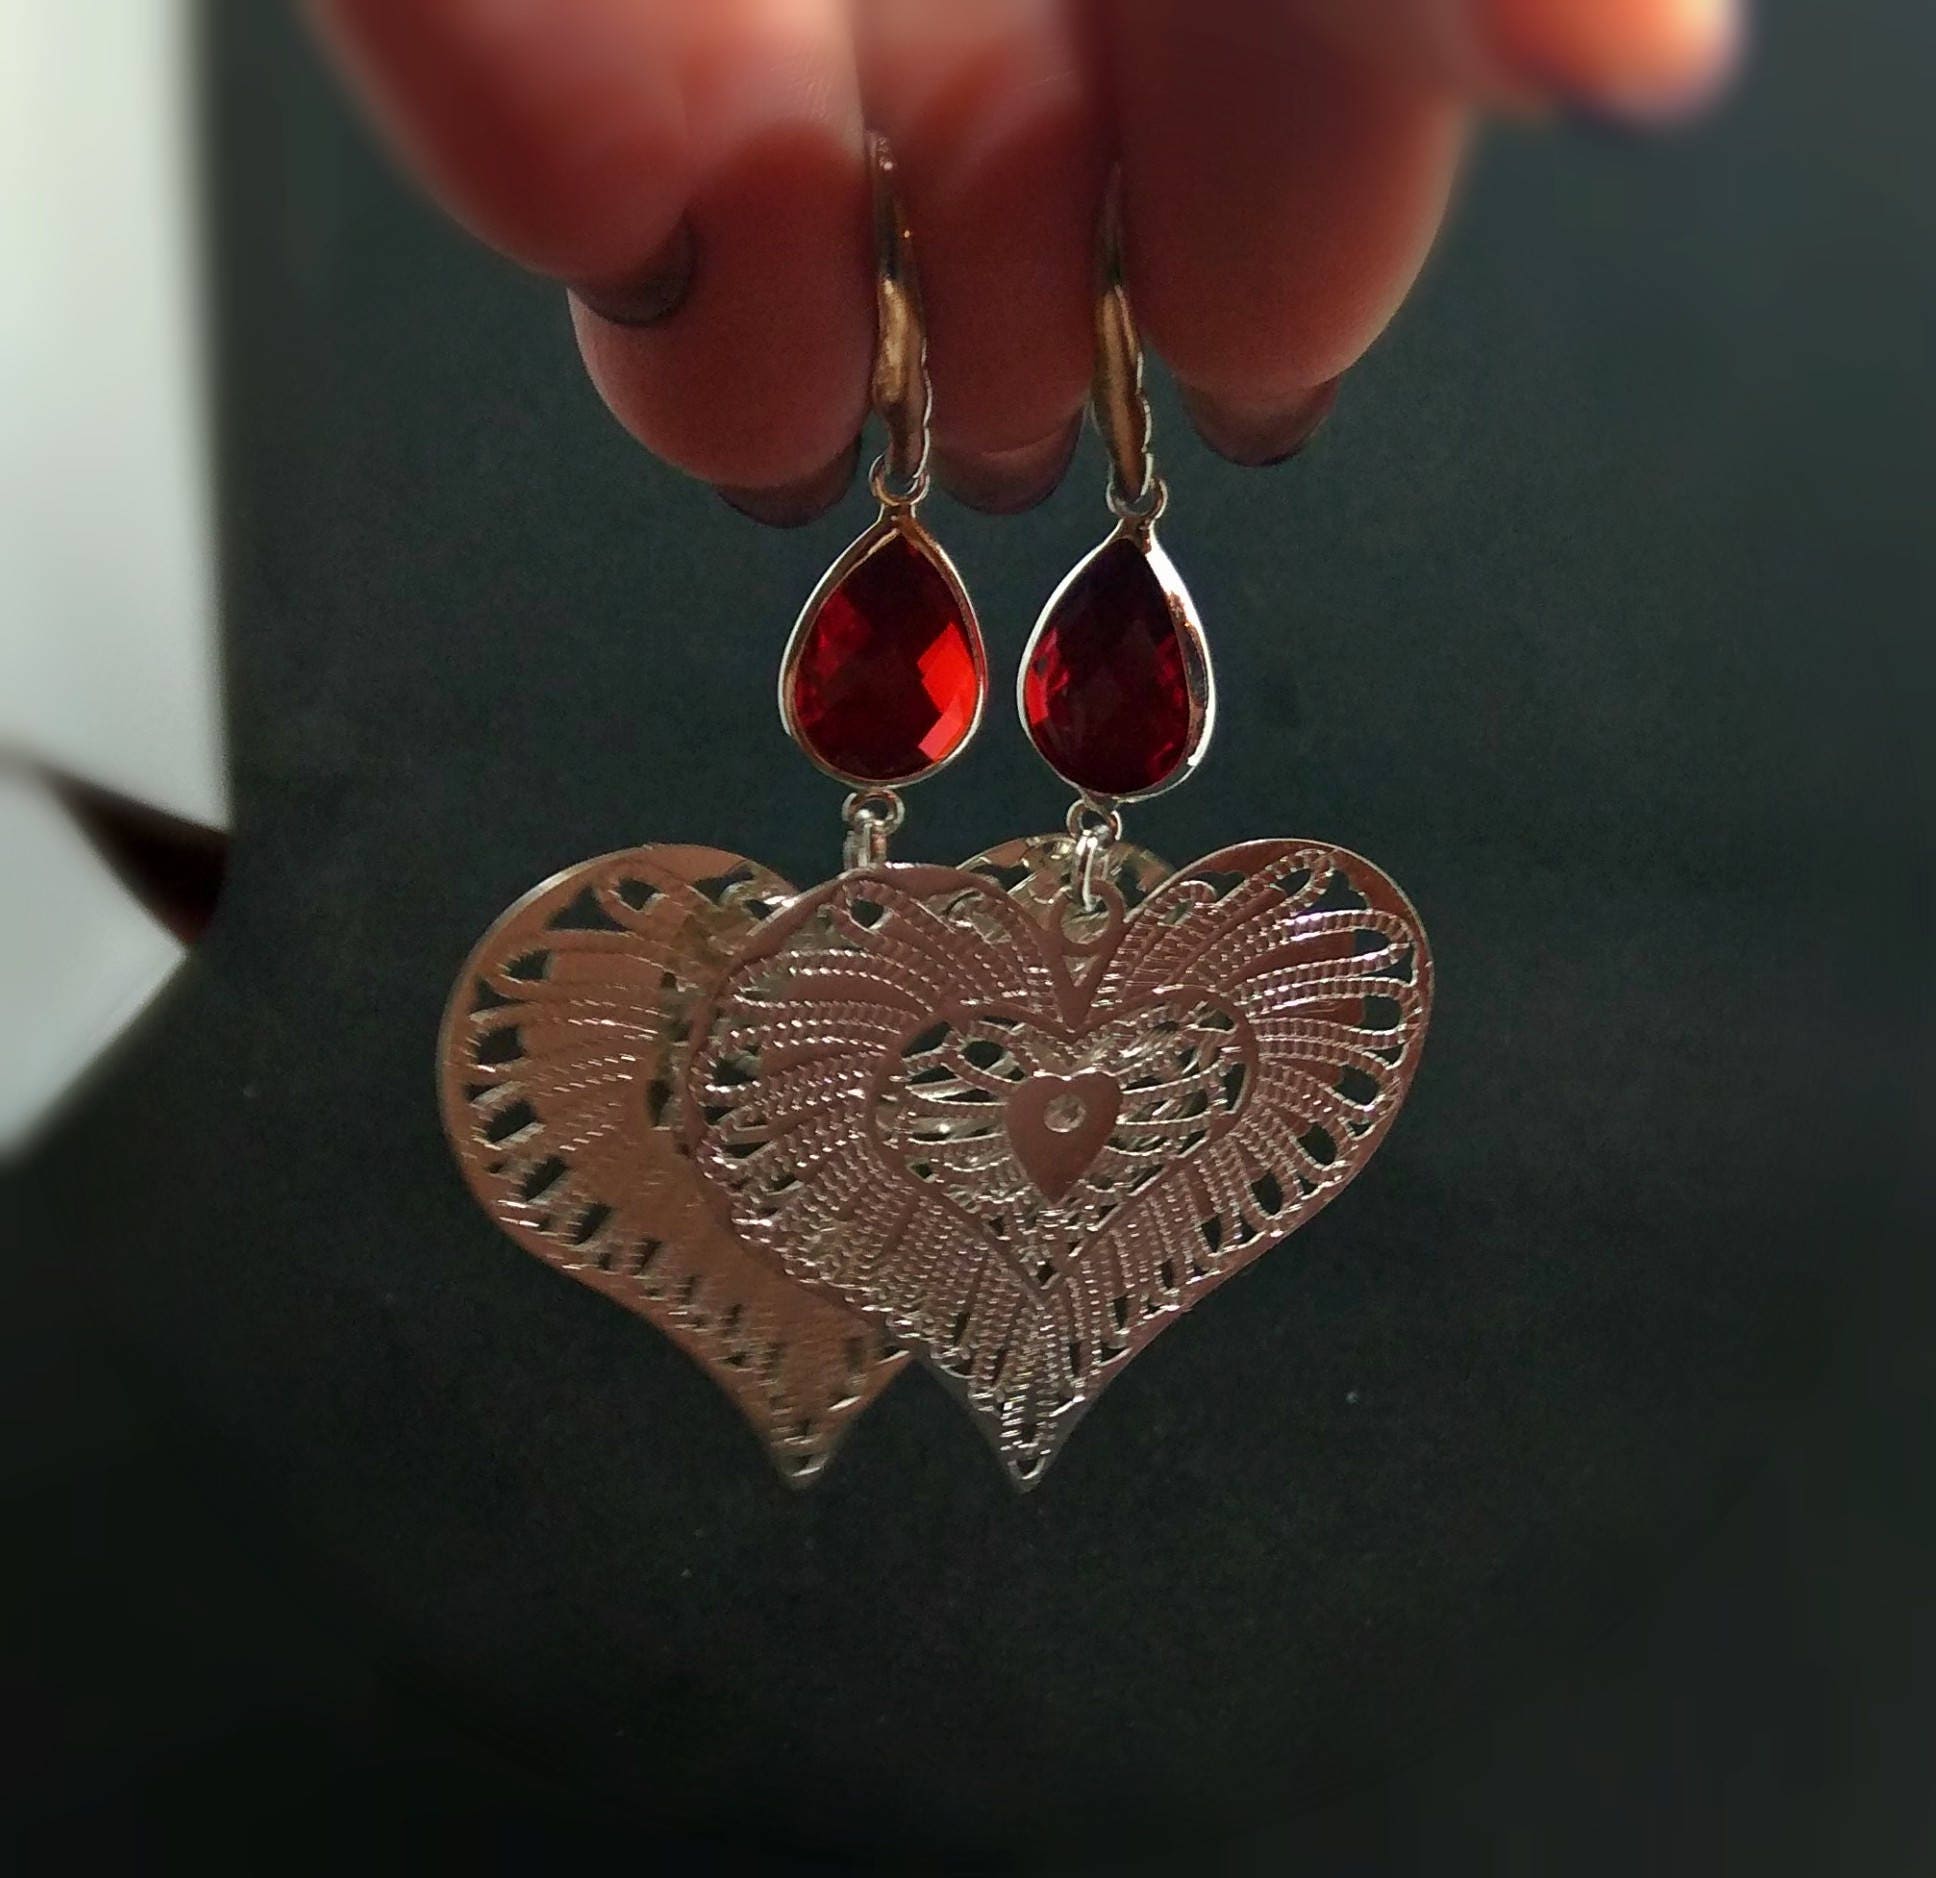 Valentines earrings/ Red heart earrings/ sterling silver glass